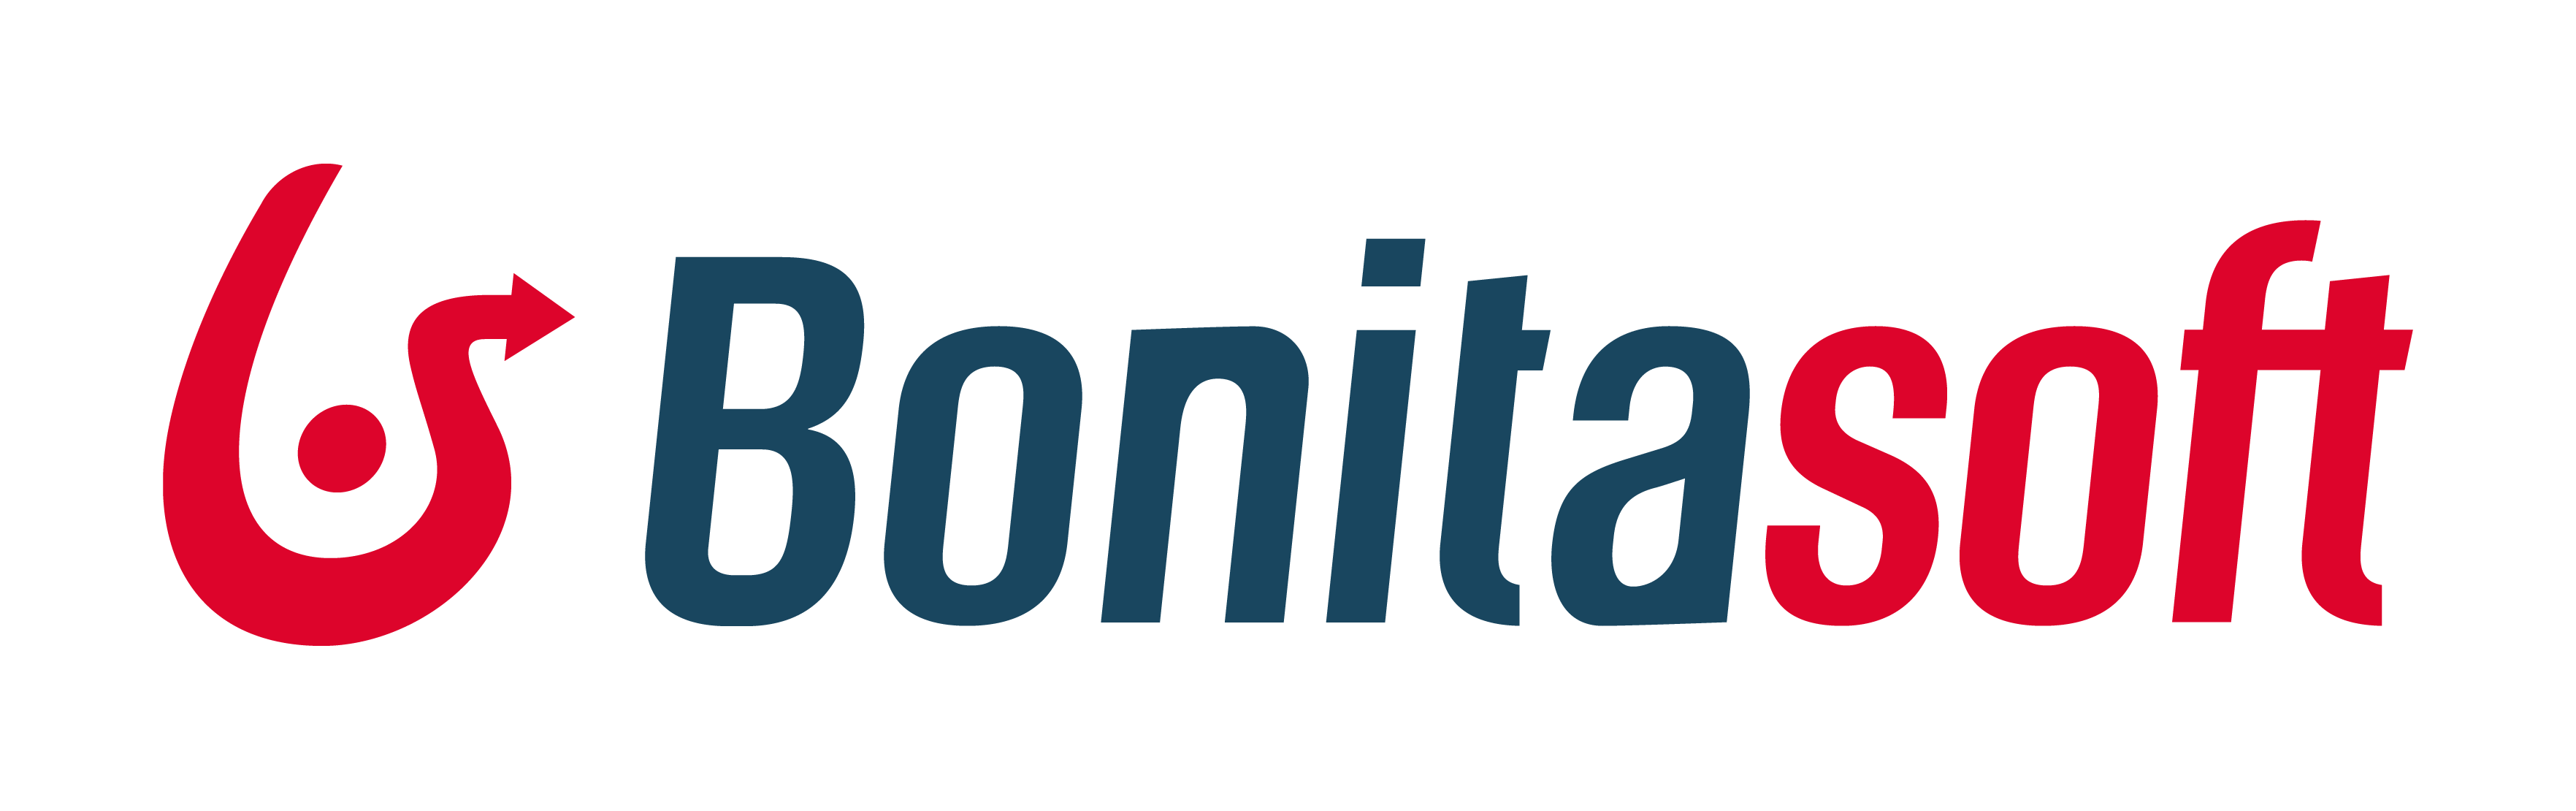 Bonitasoft